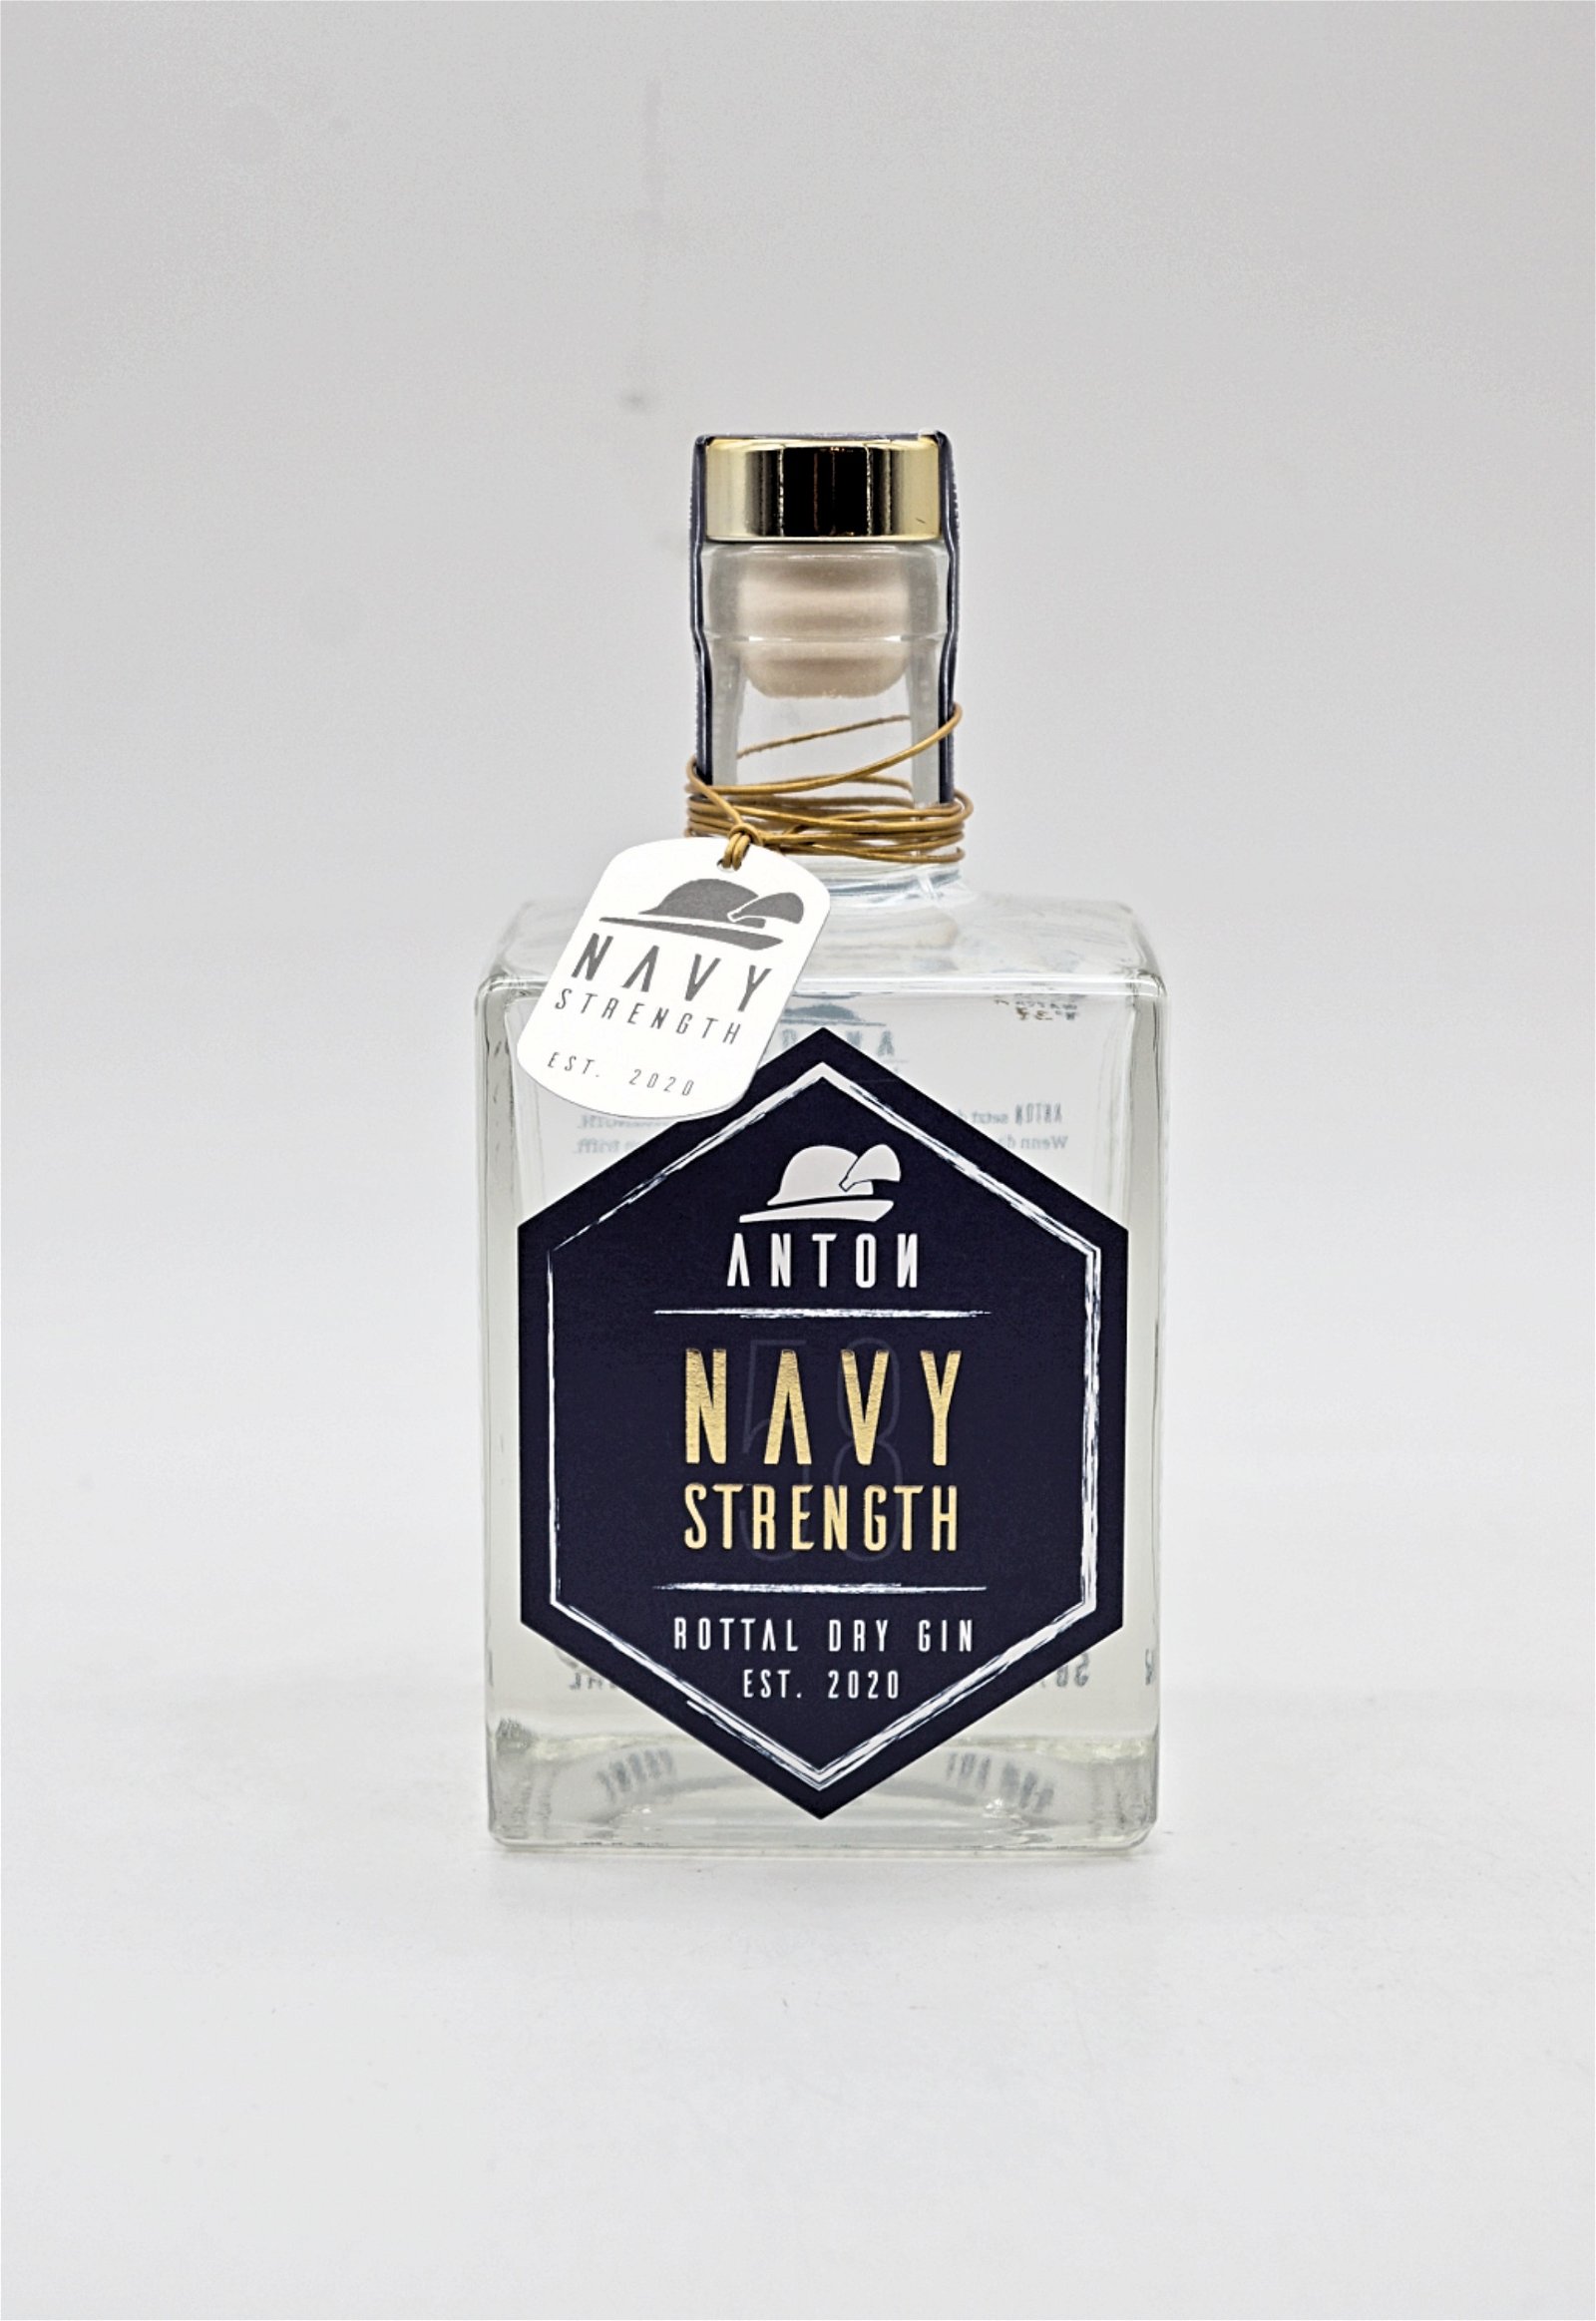 Anton Rottal Dry Gin Navy Strength